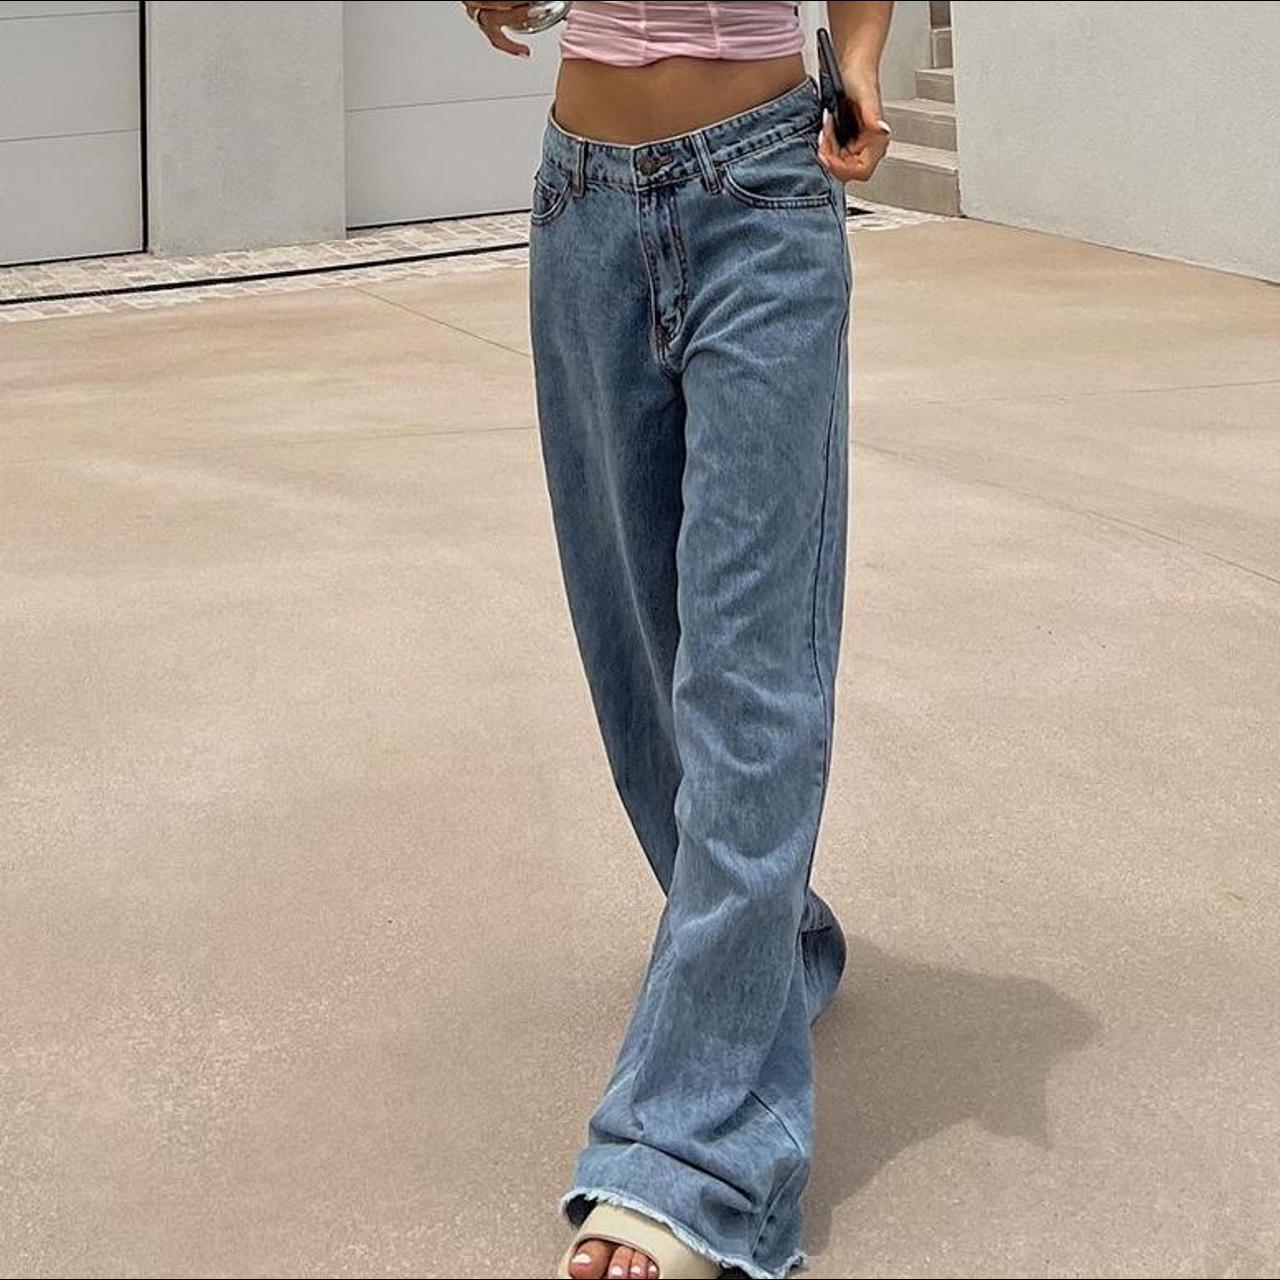 Lioness Eivissa baggy low rise jeans Size XS - would... - Depop